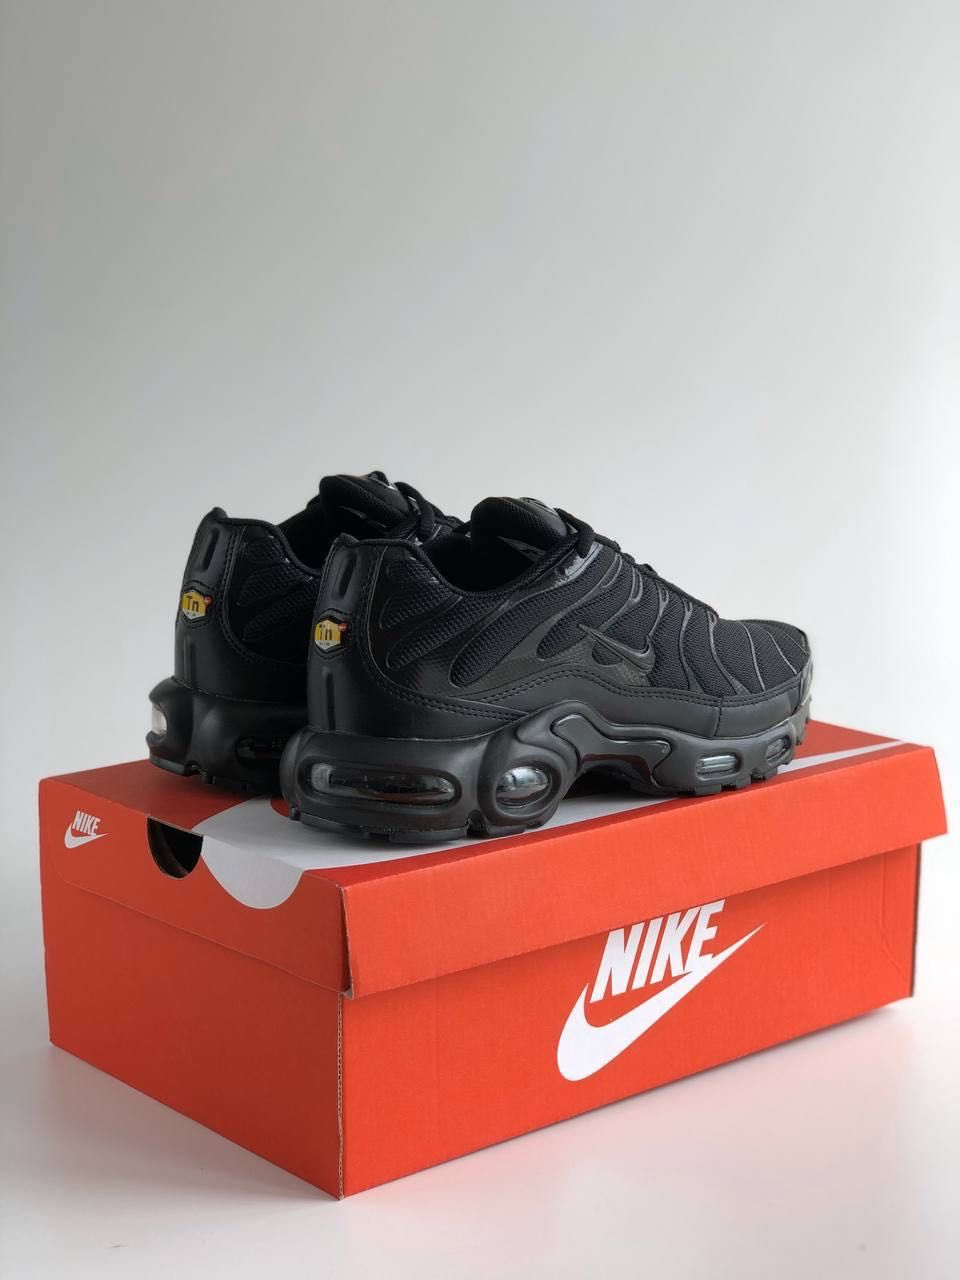 Мужские кроссовки Nike Air Max TN Plus full black . Размеры 41-45